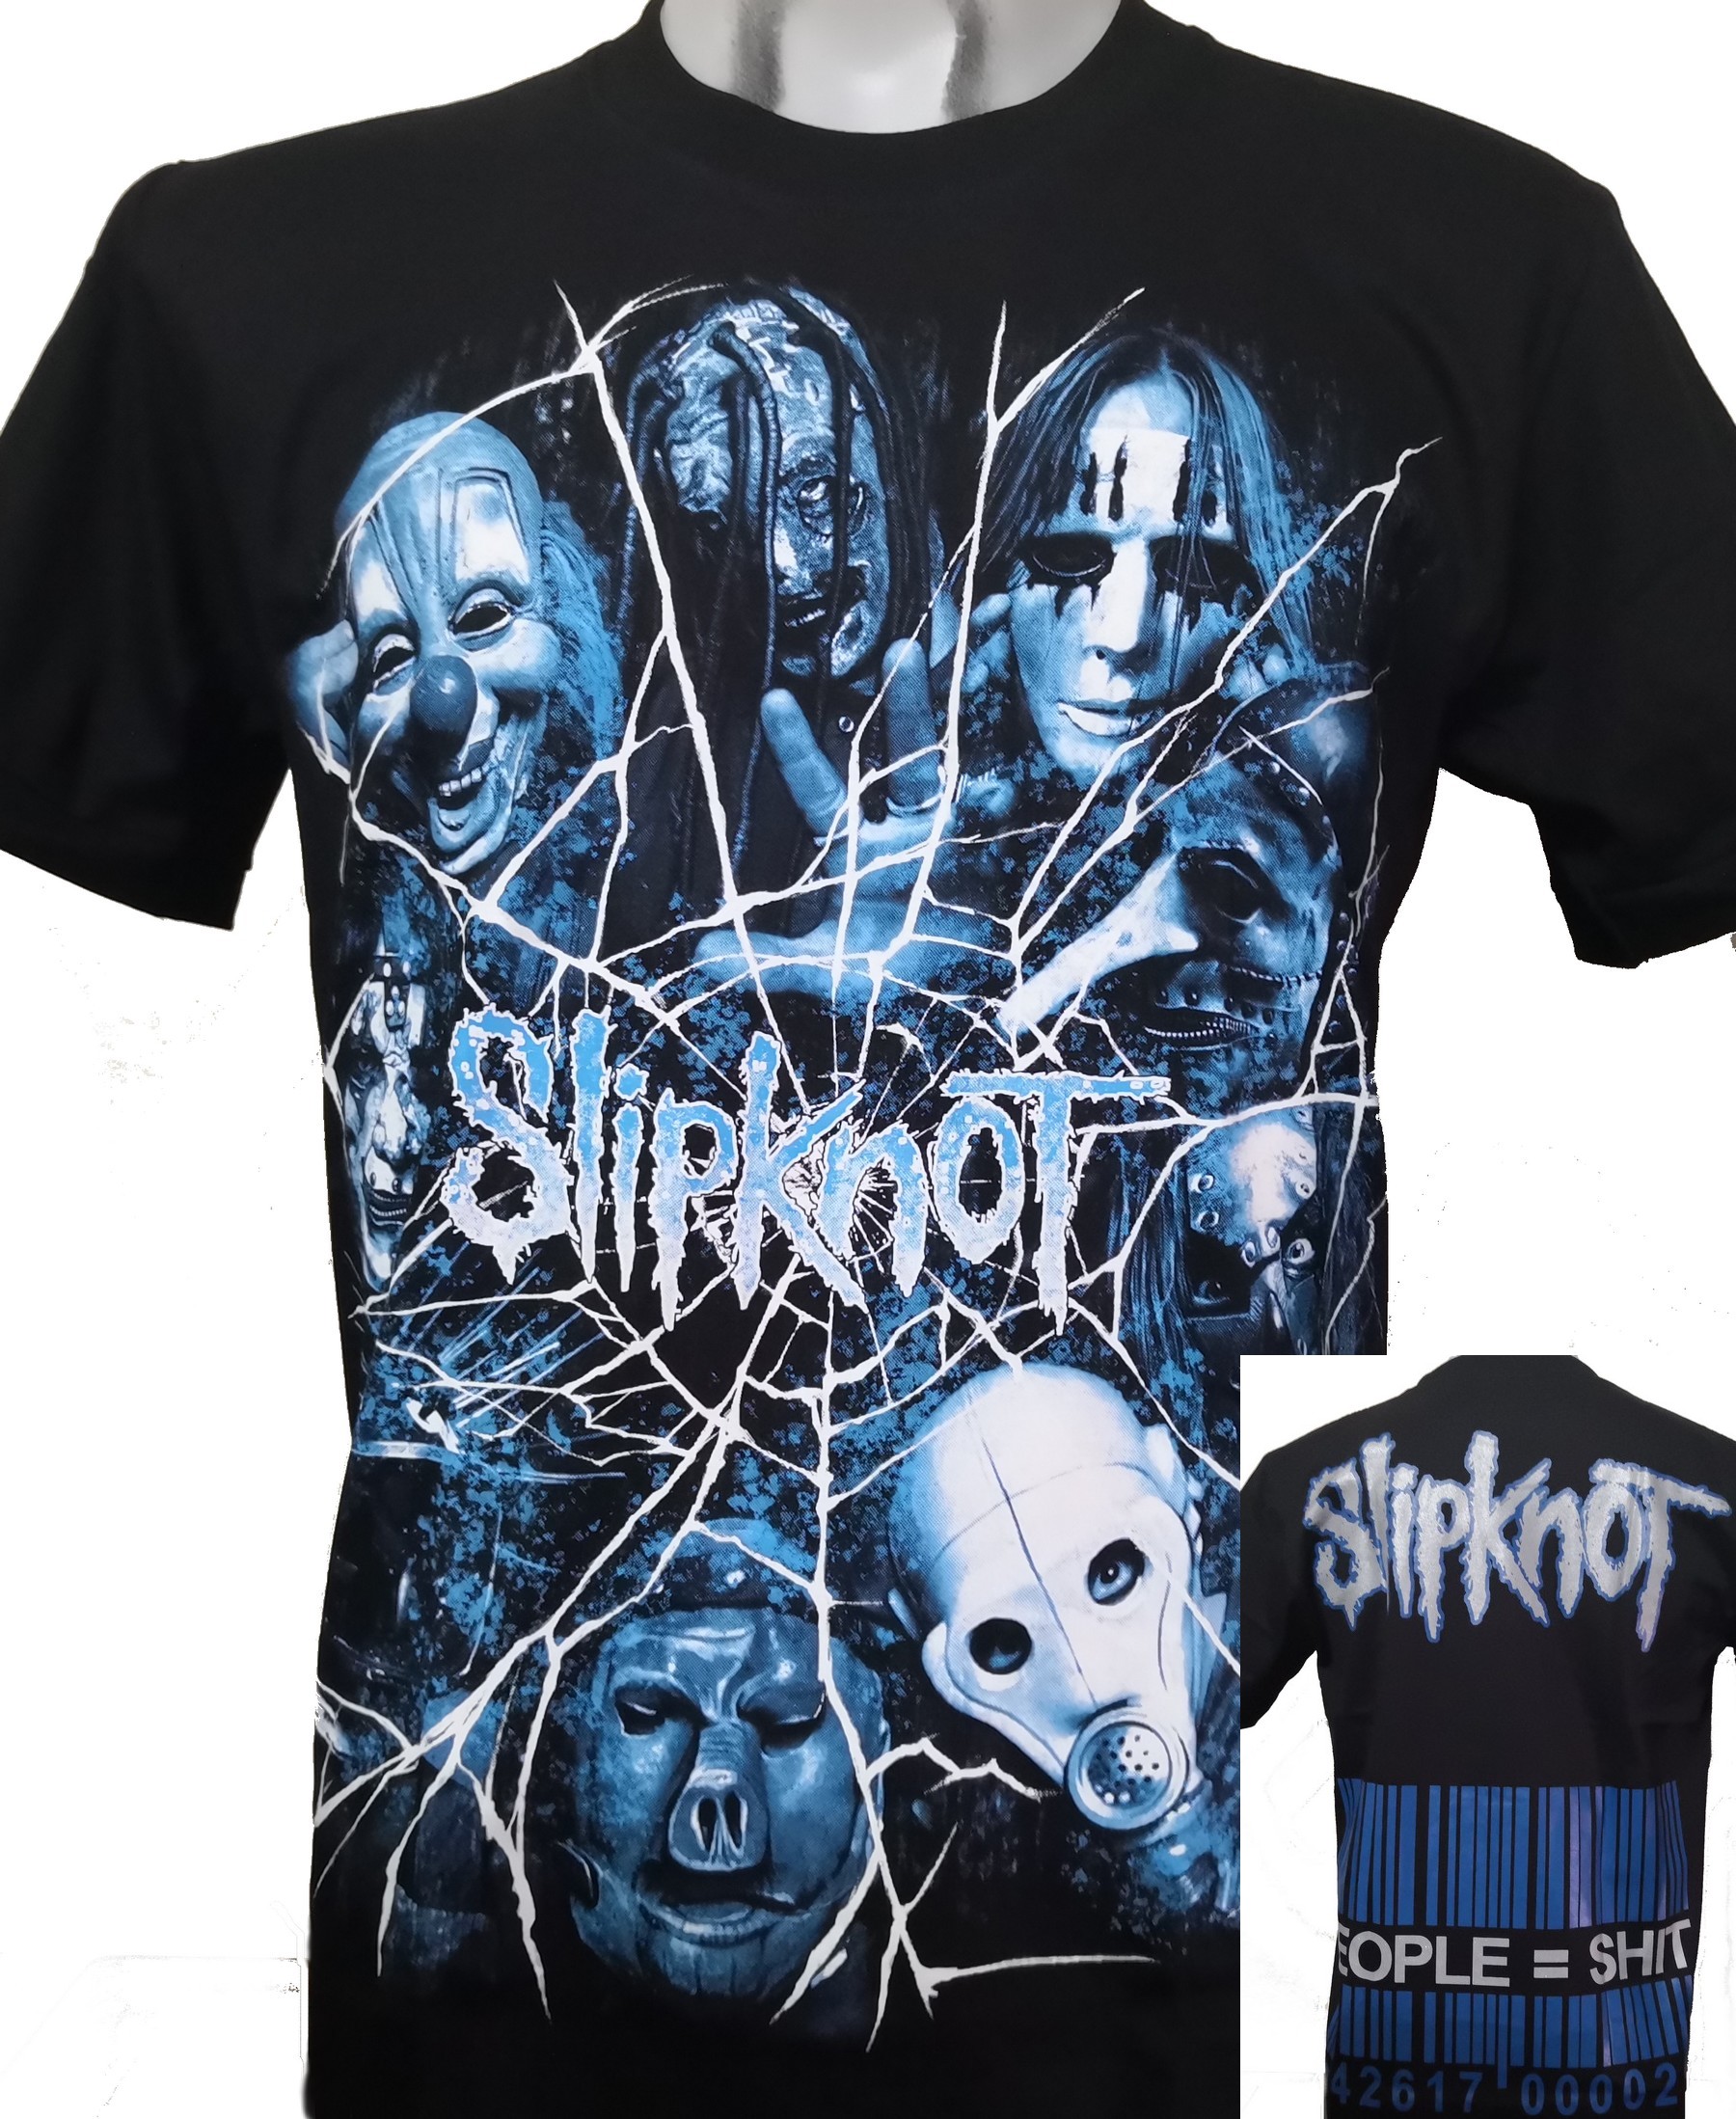 Slipknot t-shirt People = Shit size XXXL